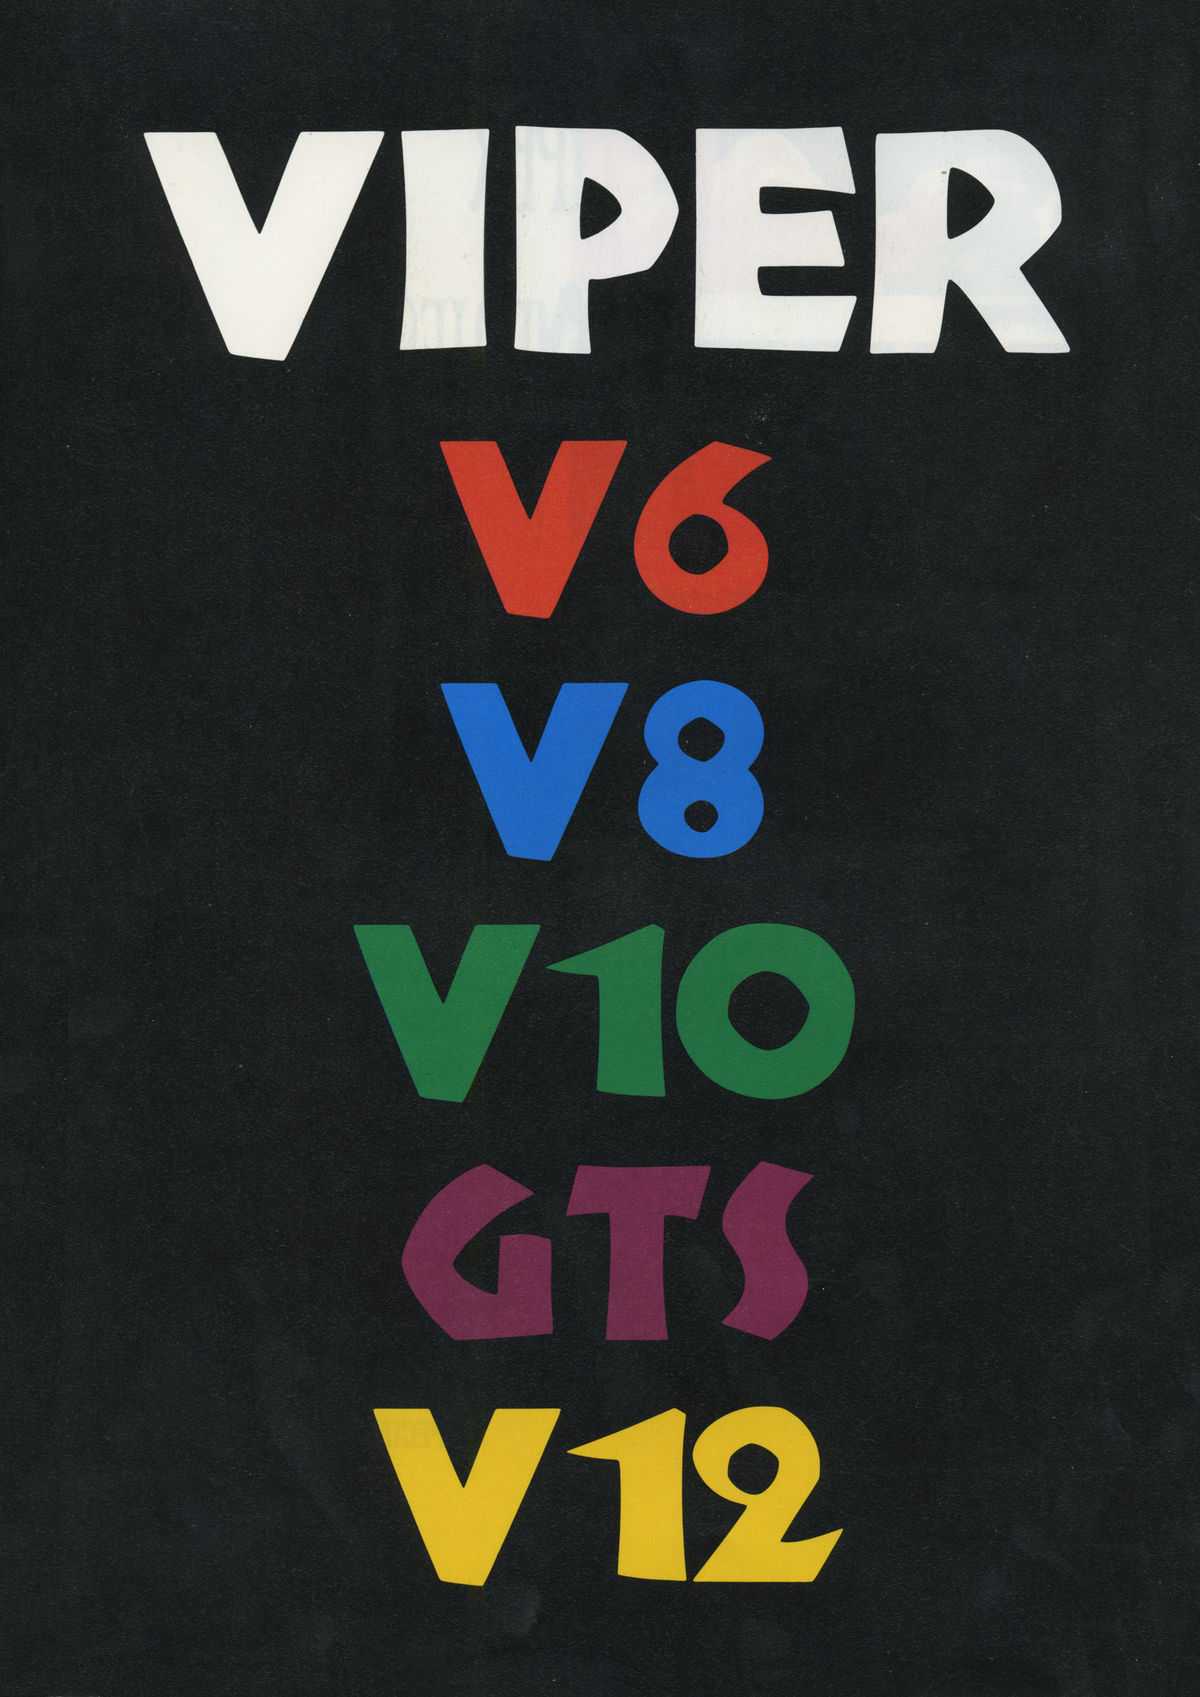 VIPER Series Official Artbook VIPER Series イラスト原画集